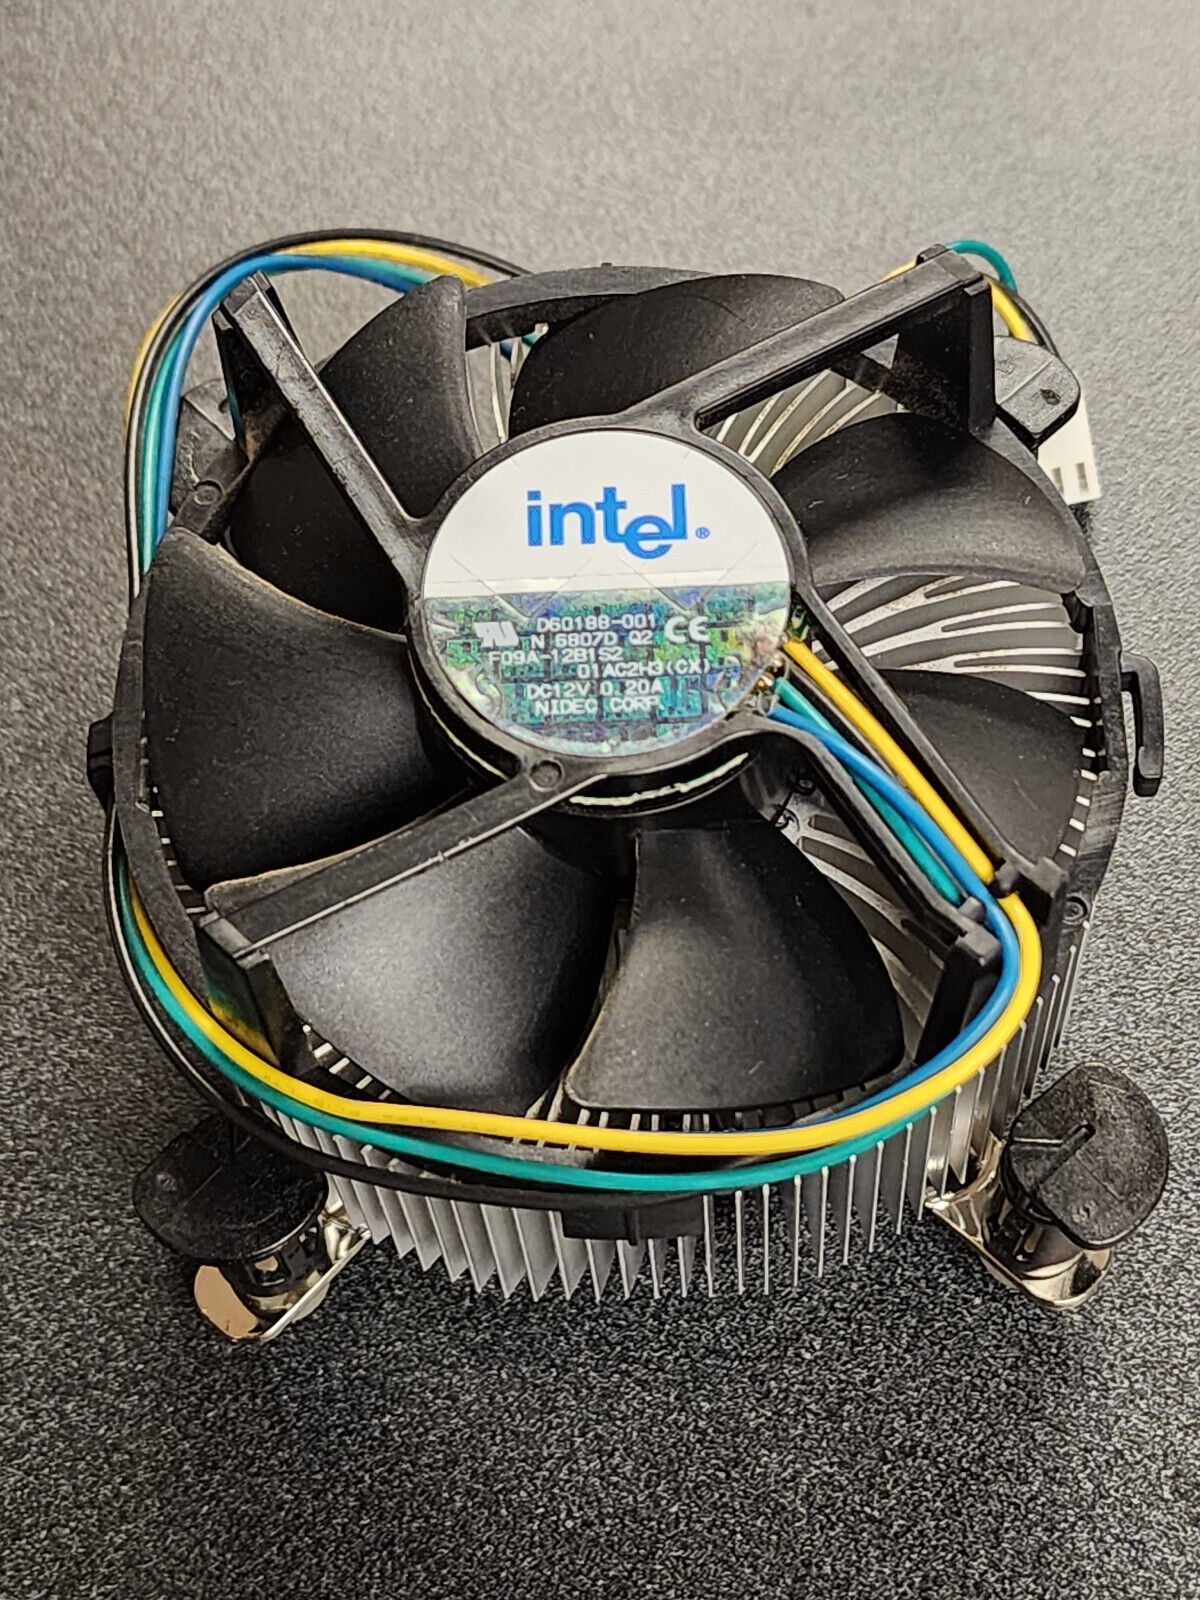 INTEL D60188-001 Heat Sink Cooling Fan Assembly for Intel Socket 775 CPU 4-pin